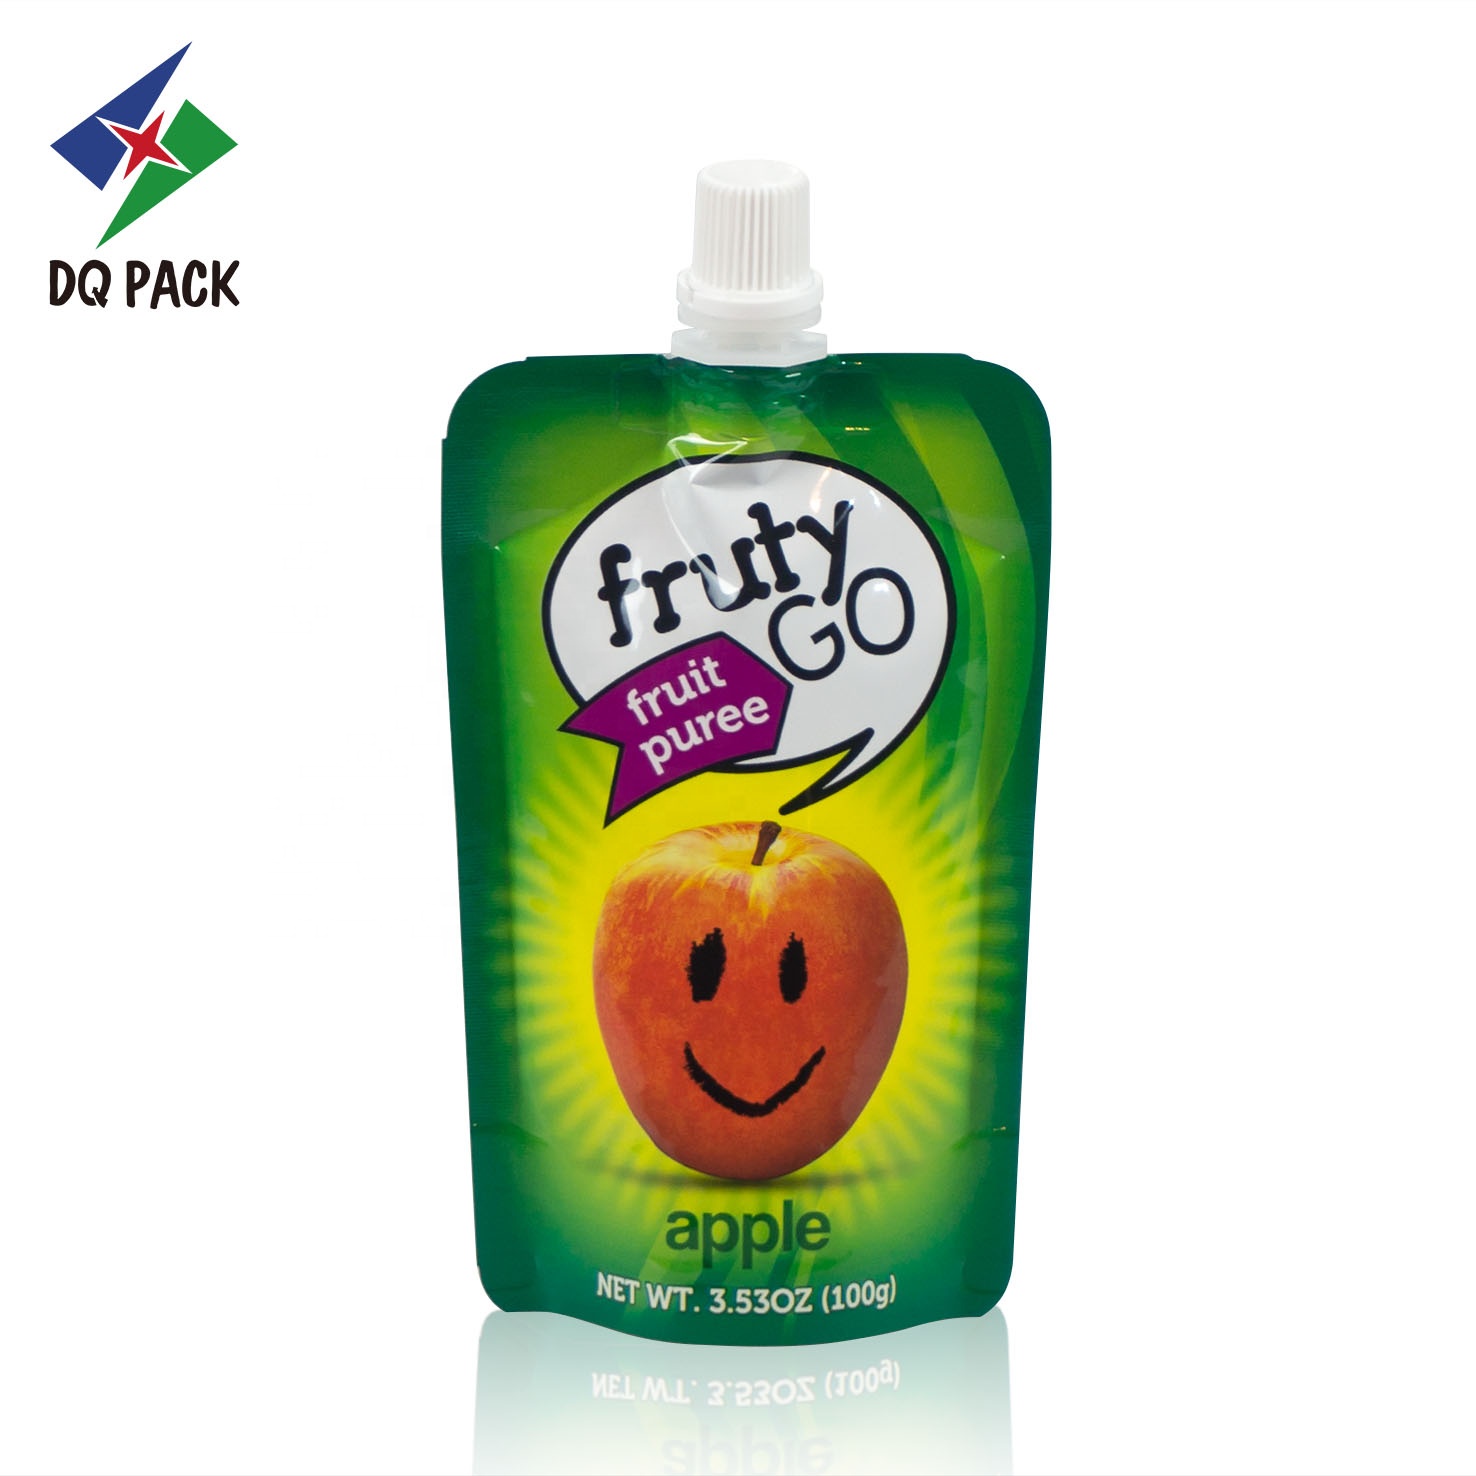 DQ PACK Custom Printed 120g Reusable Doypack Juice Organic Refill Packaging Bag Fruit Puree Squeeze Bag